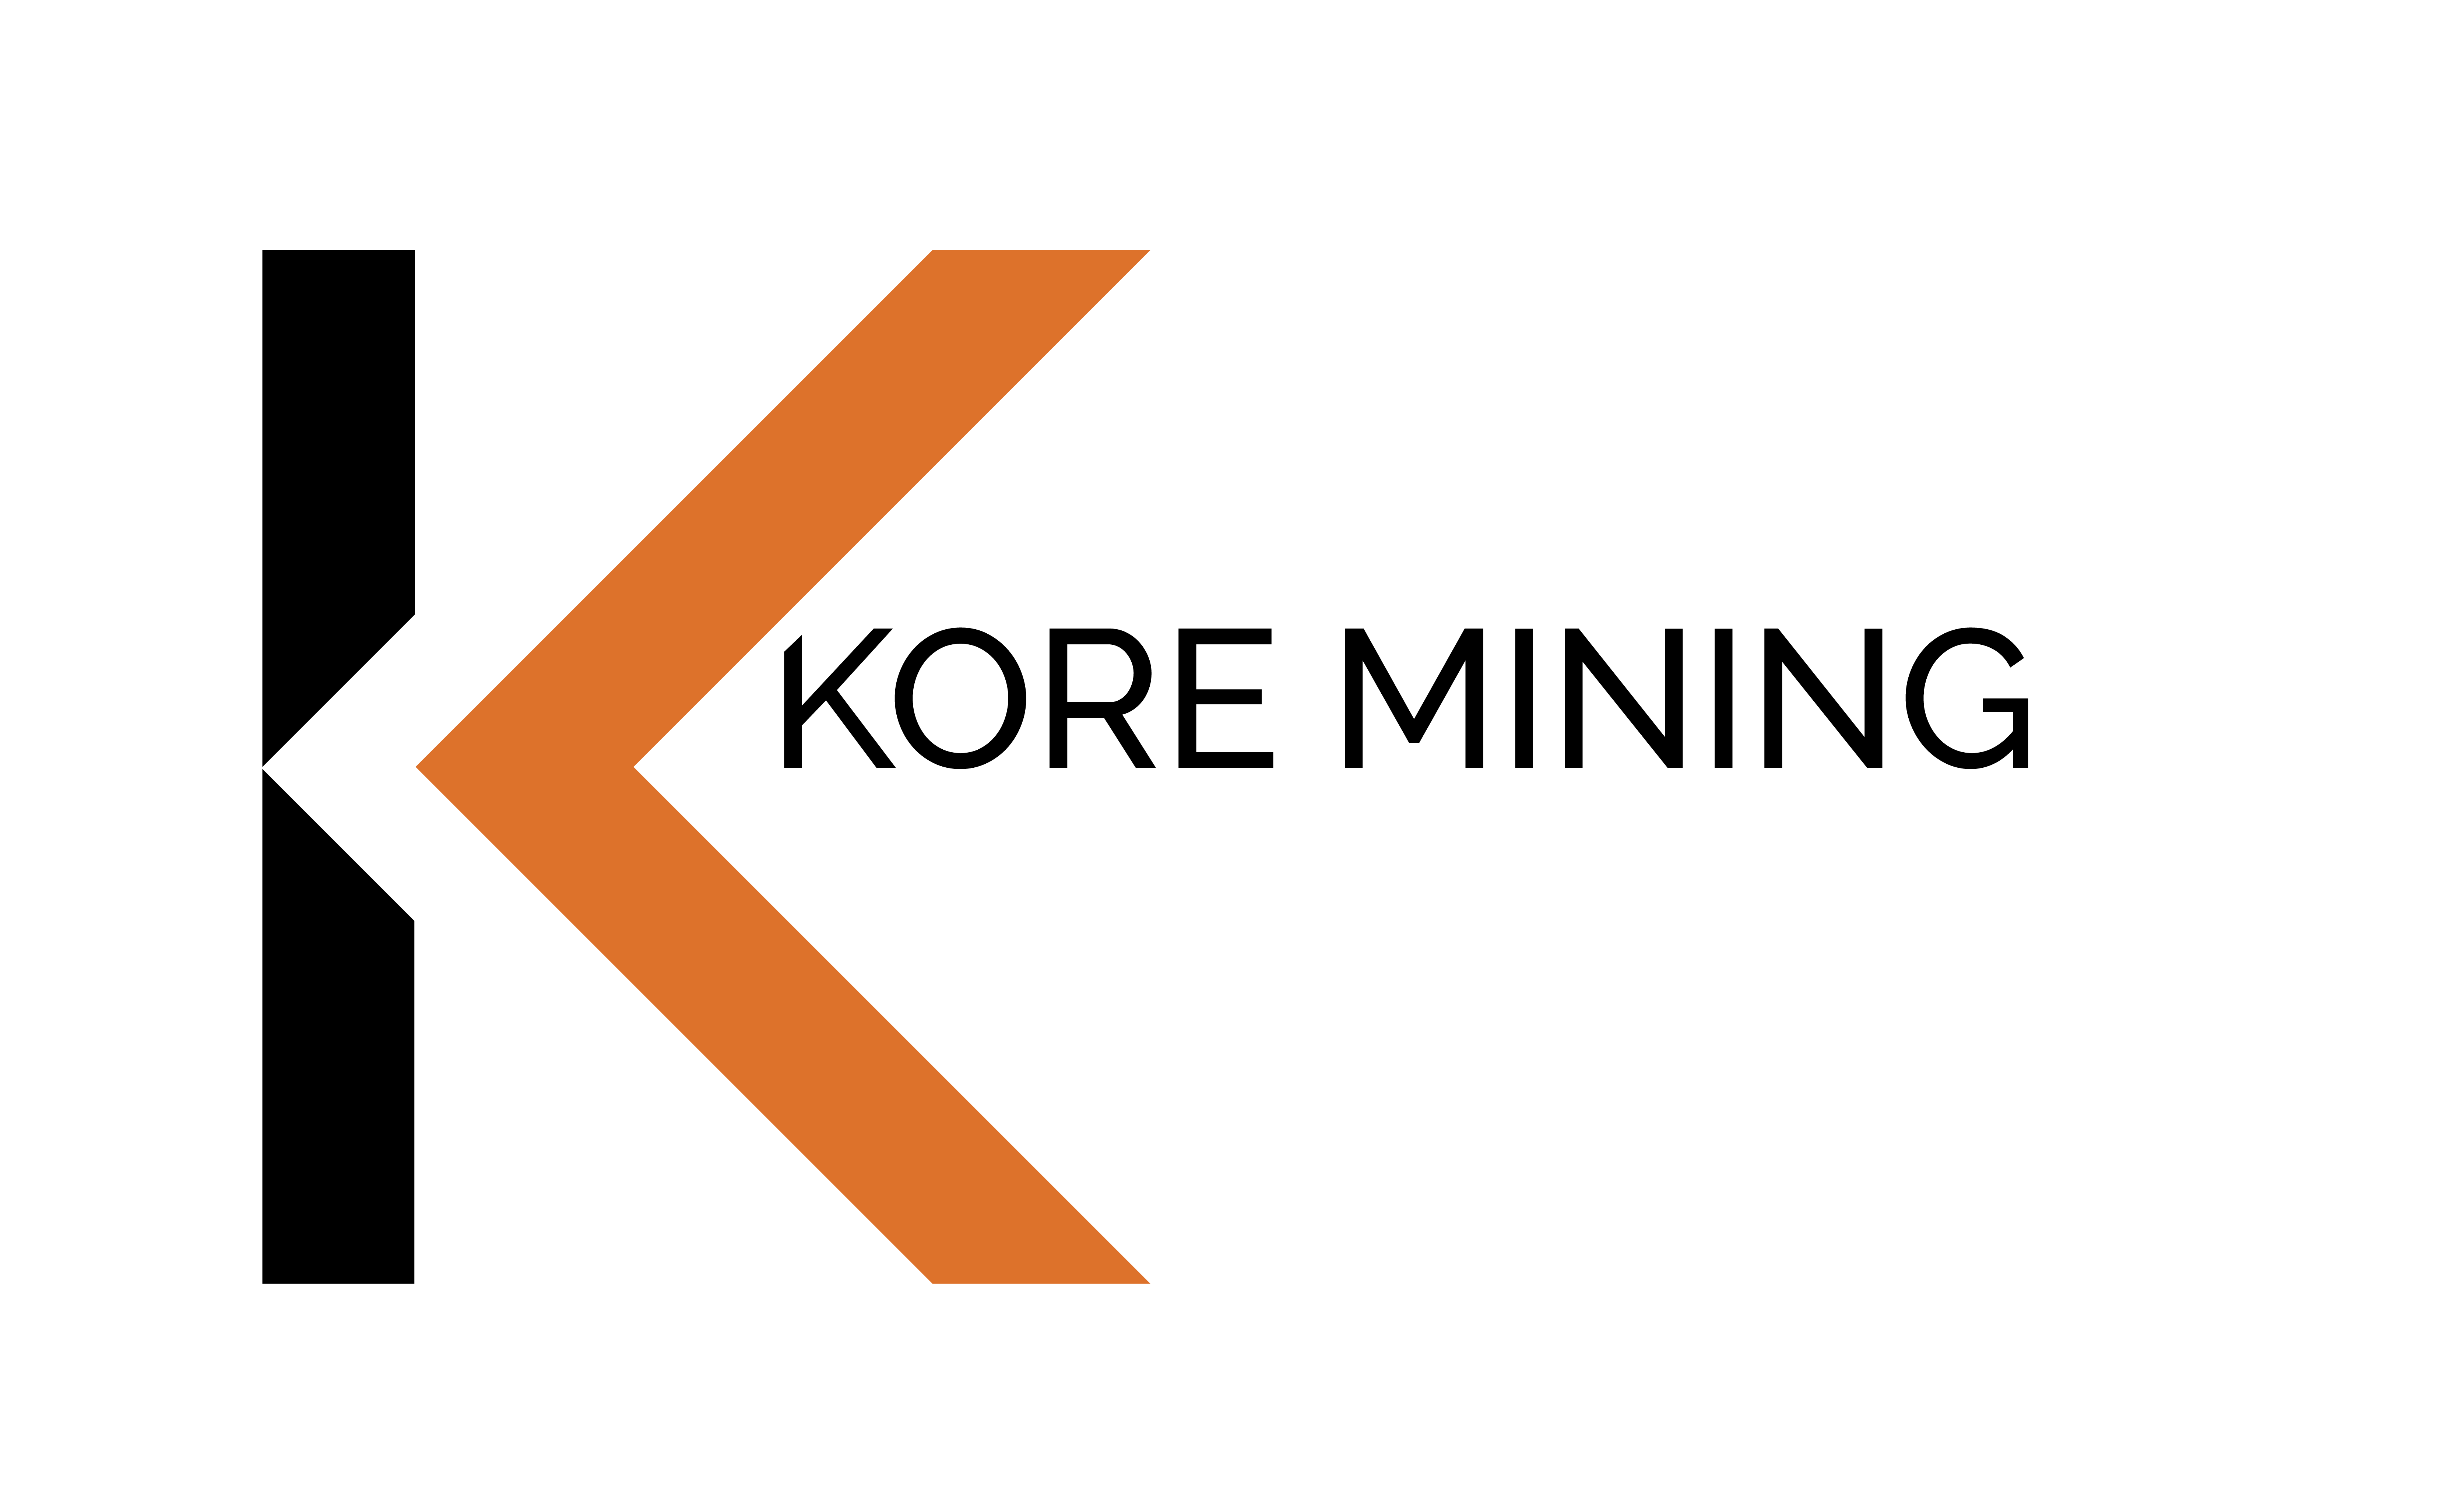 Kore Mining logo new-01